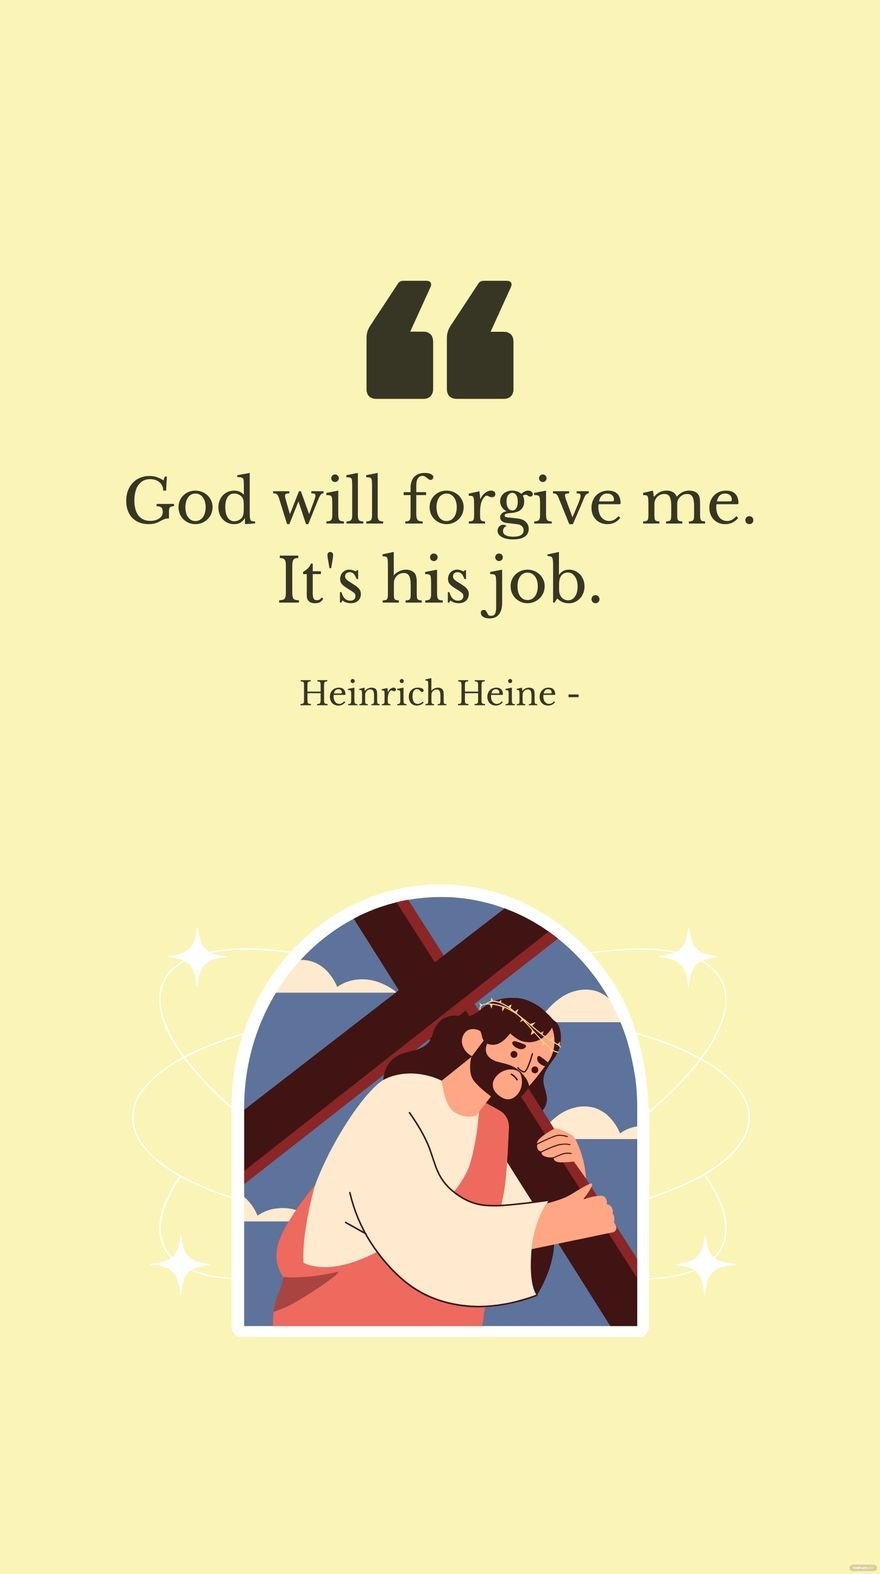 Heinrich Heine - God will forgive me. It's his job.